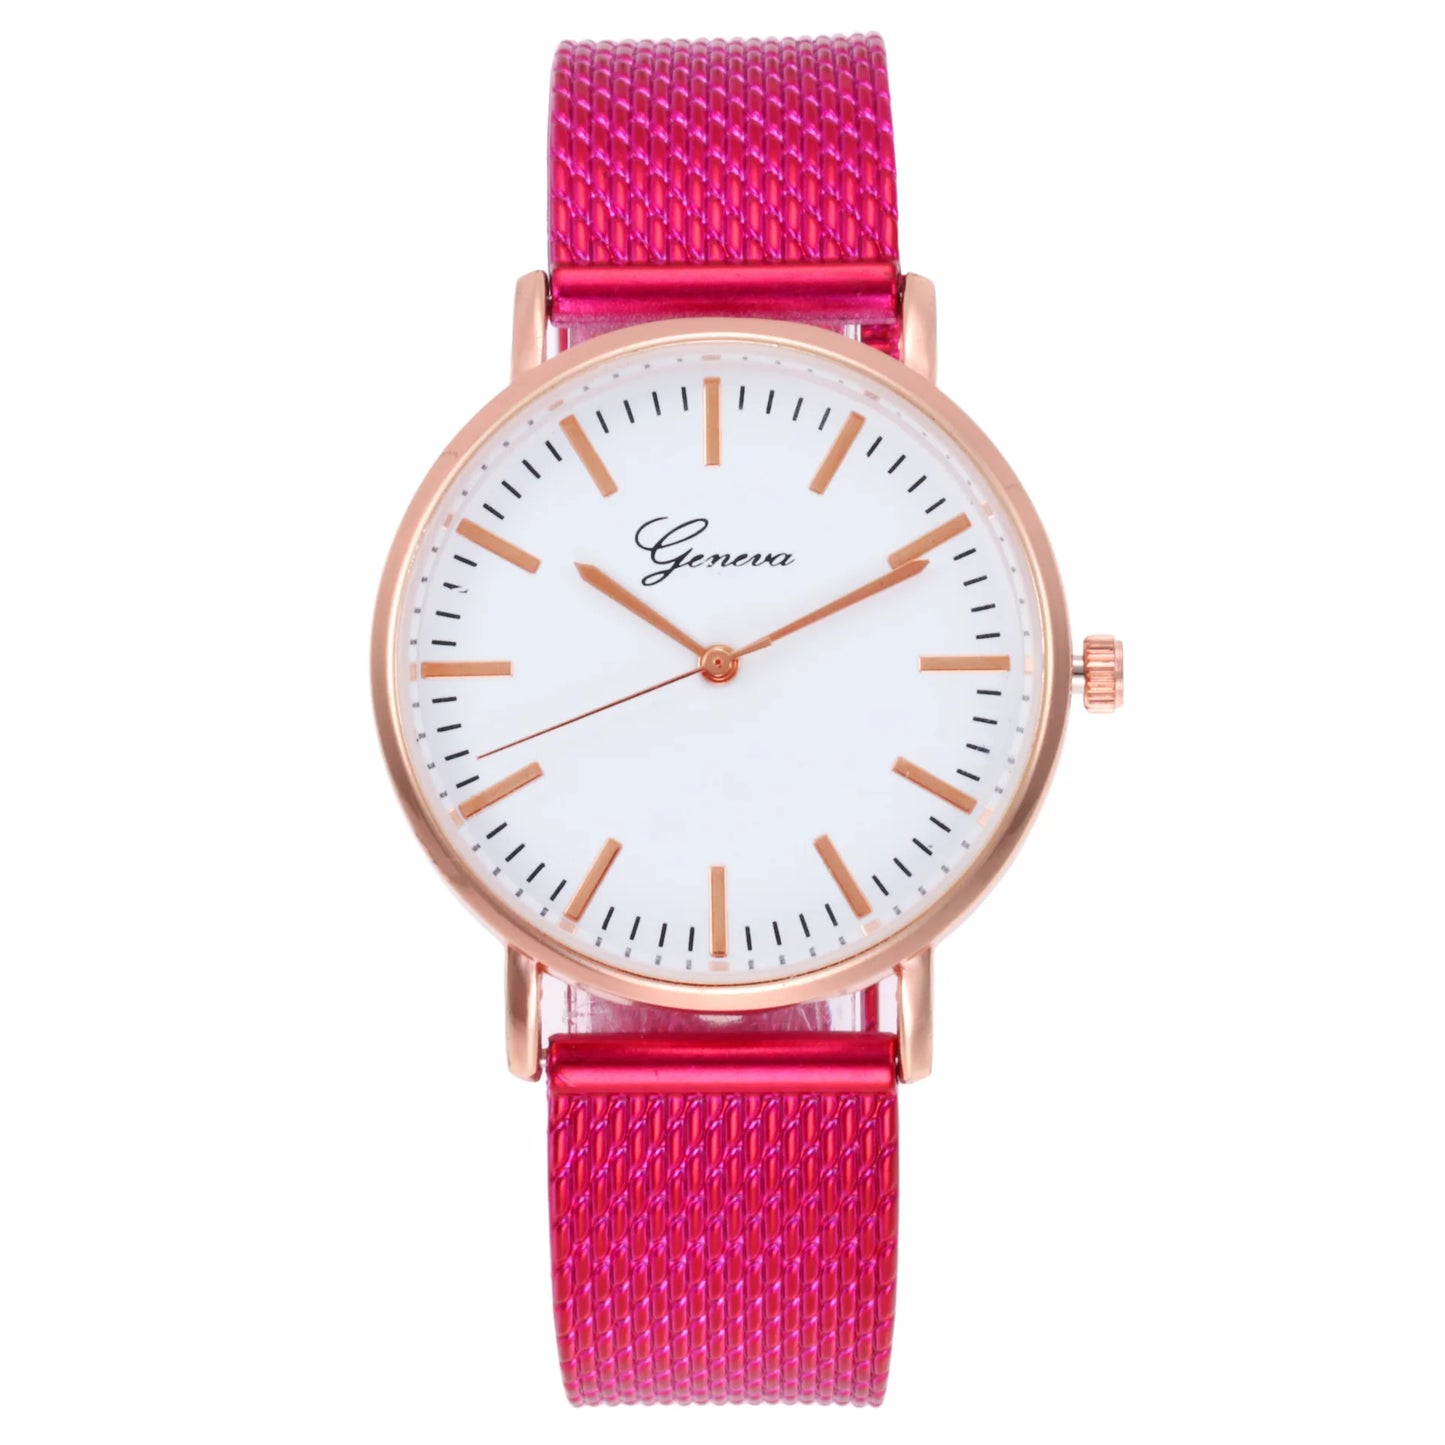 Quarz-Armbanduhr für Damen mit Silikonarmband und Zifferblatt